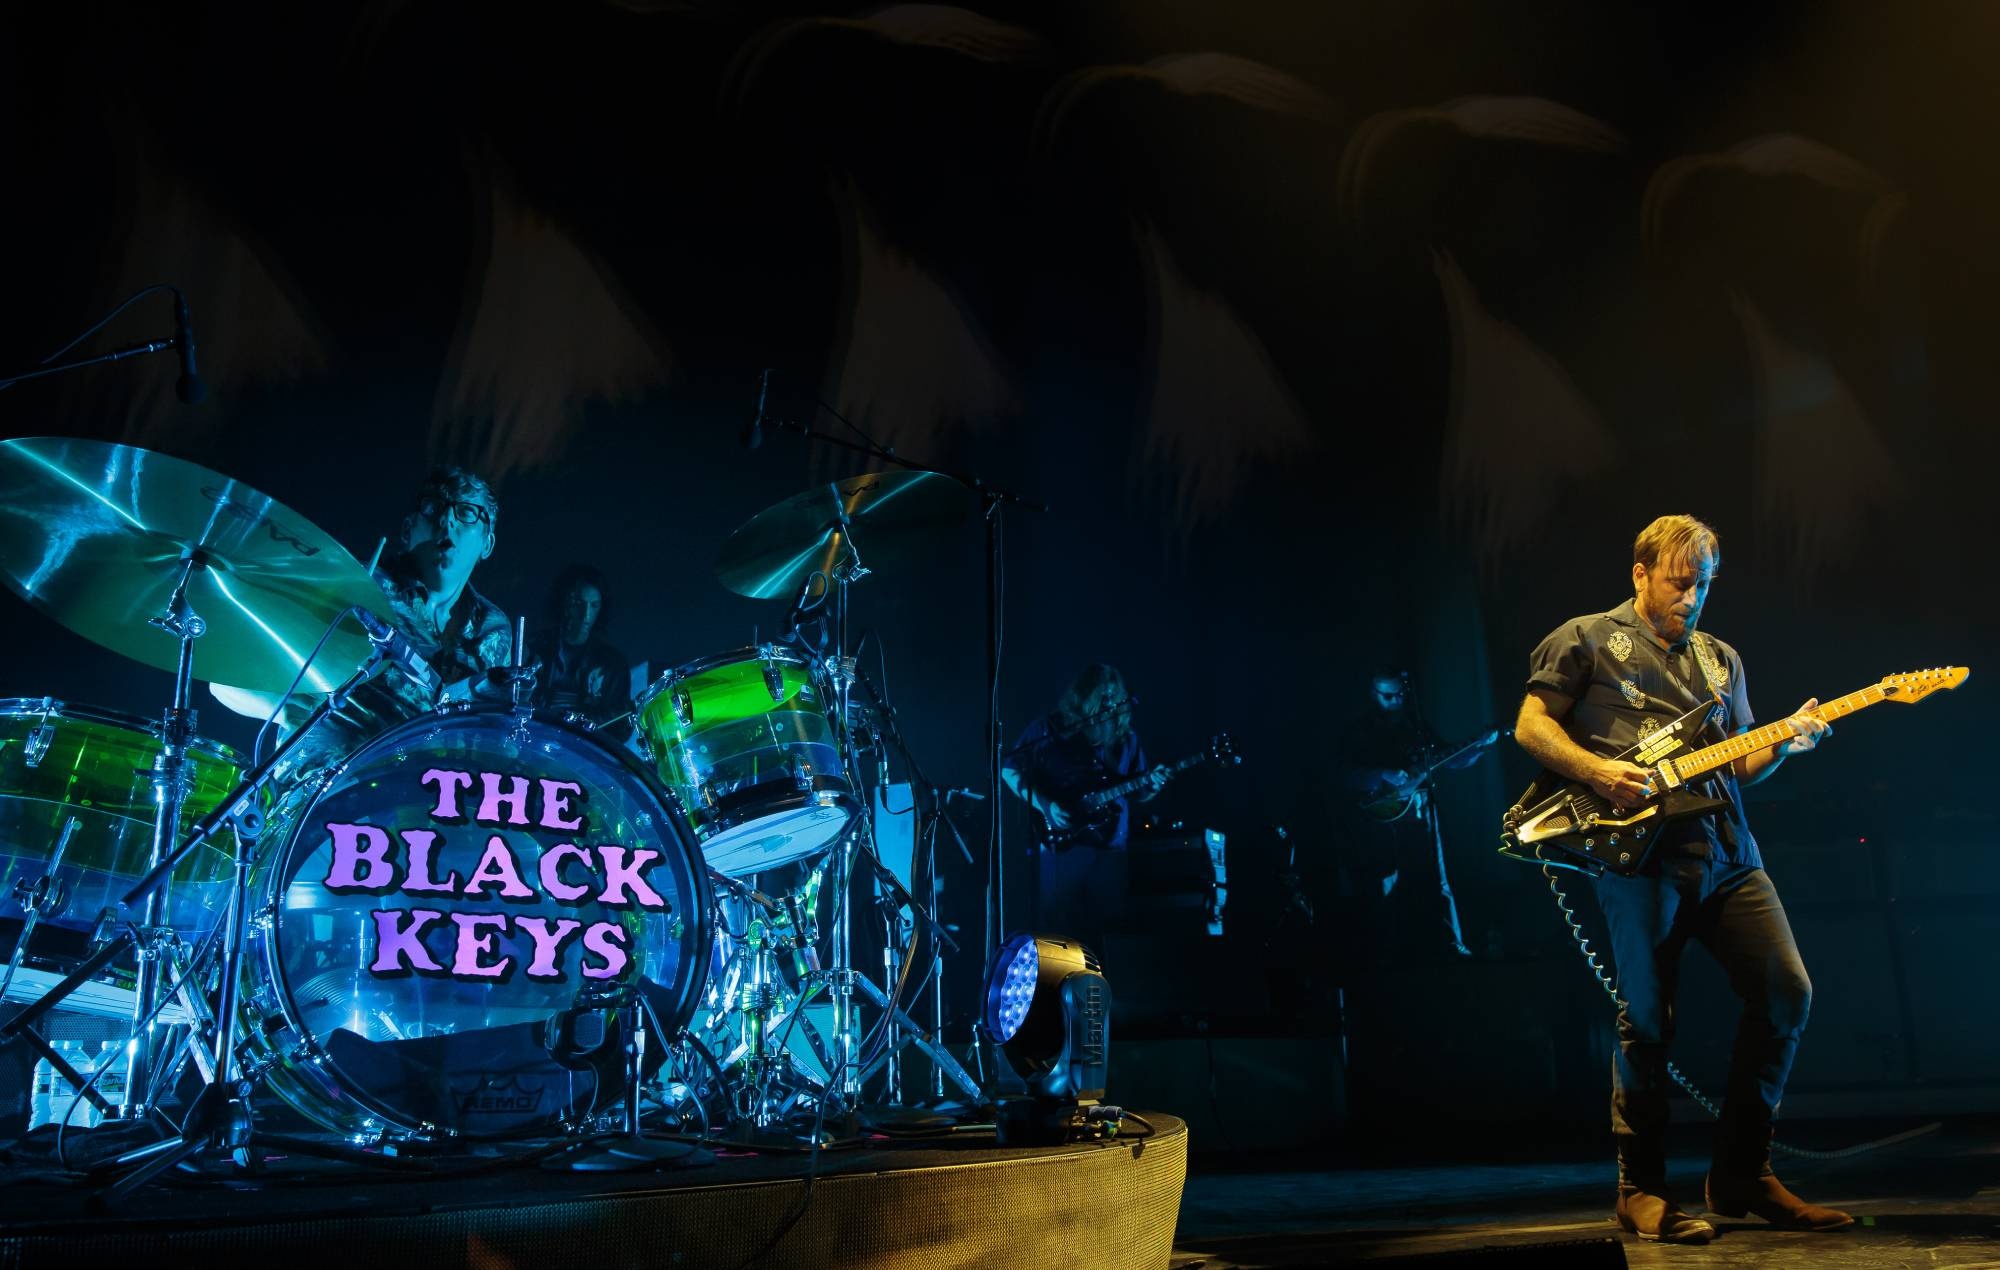 The Black Keys band, Crawling Kingsnake, Delta Kream, 2000x1270 HD Desktop